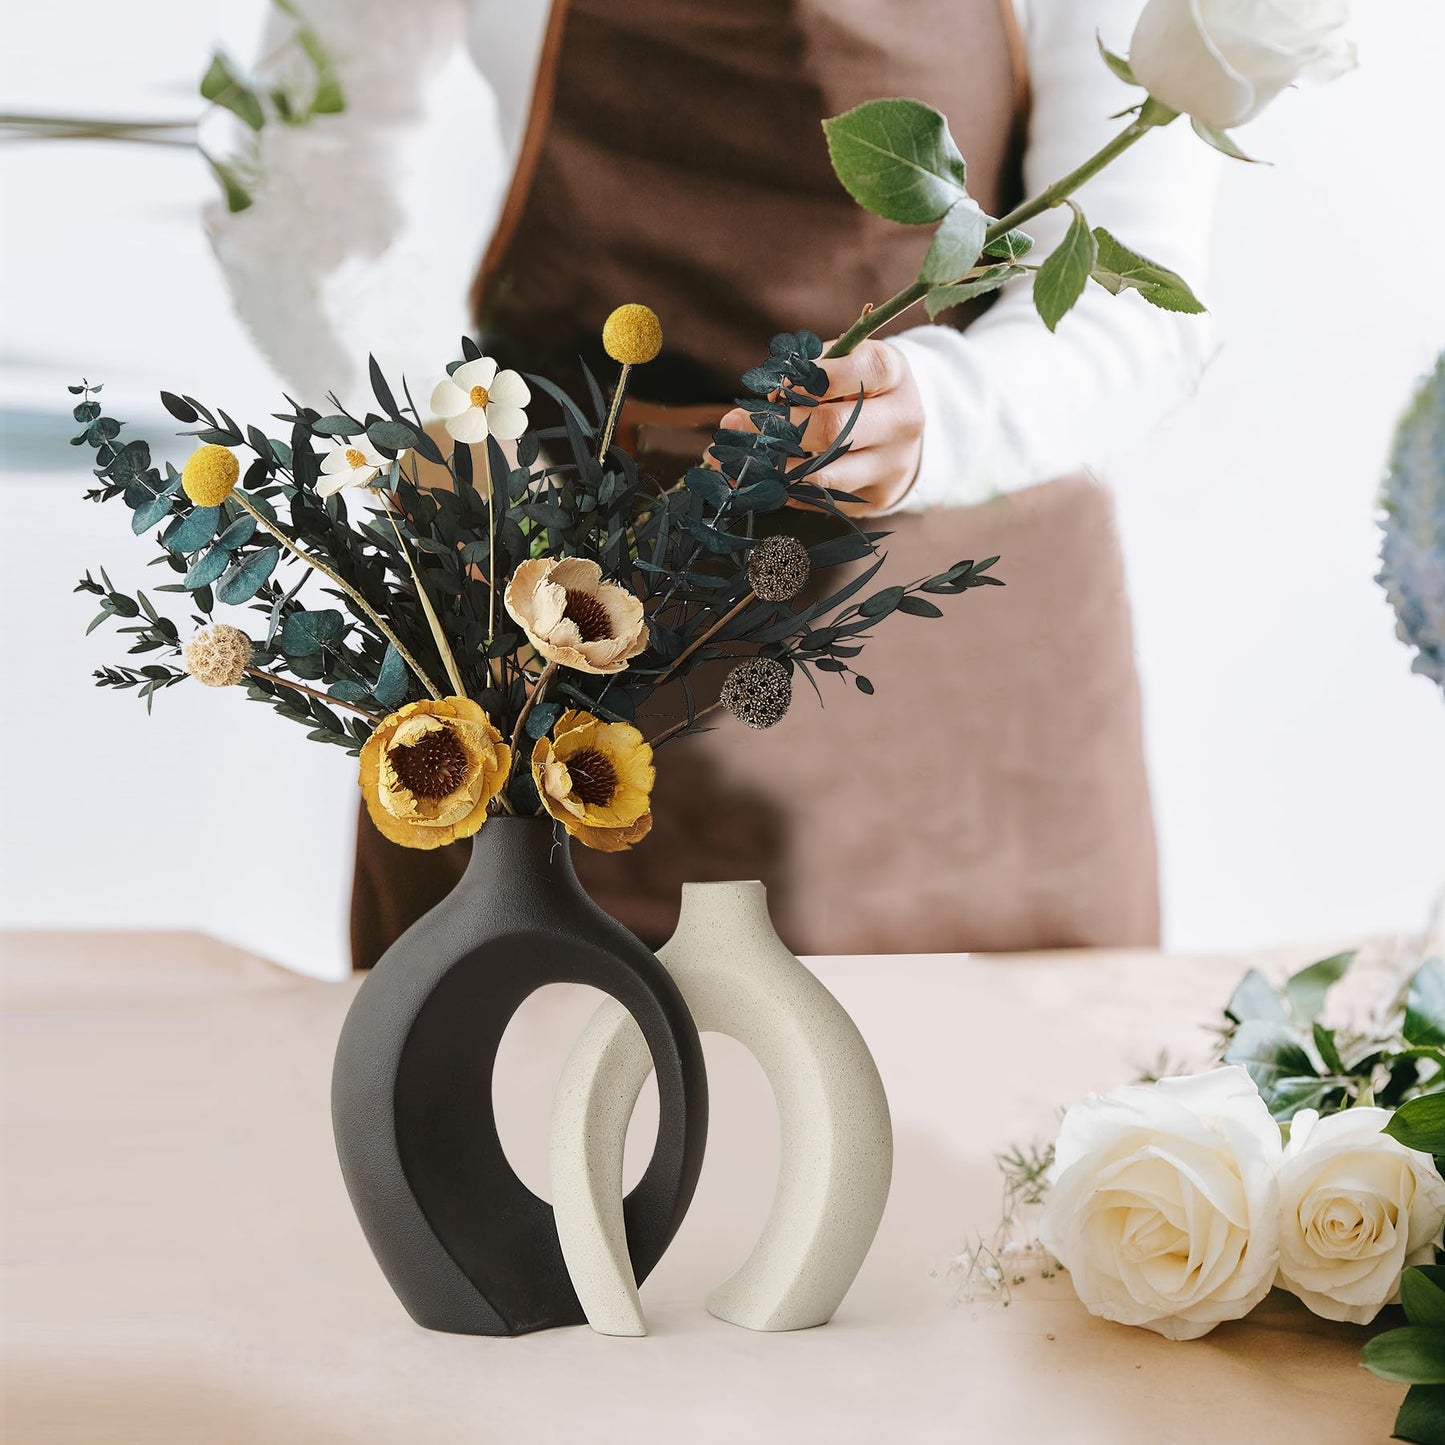 Black Ceramic Vase Home Decor: Crossed Flower Vases Set of 2 Modern Vase for Living Room Shelf Office Decor Centerpiece Table Decorations Decorative Vases for Flowers Wedding Gifts